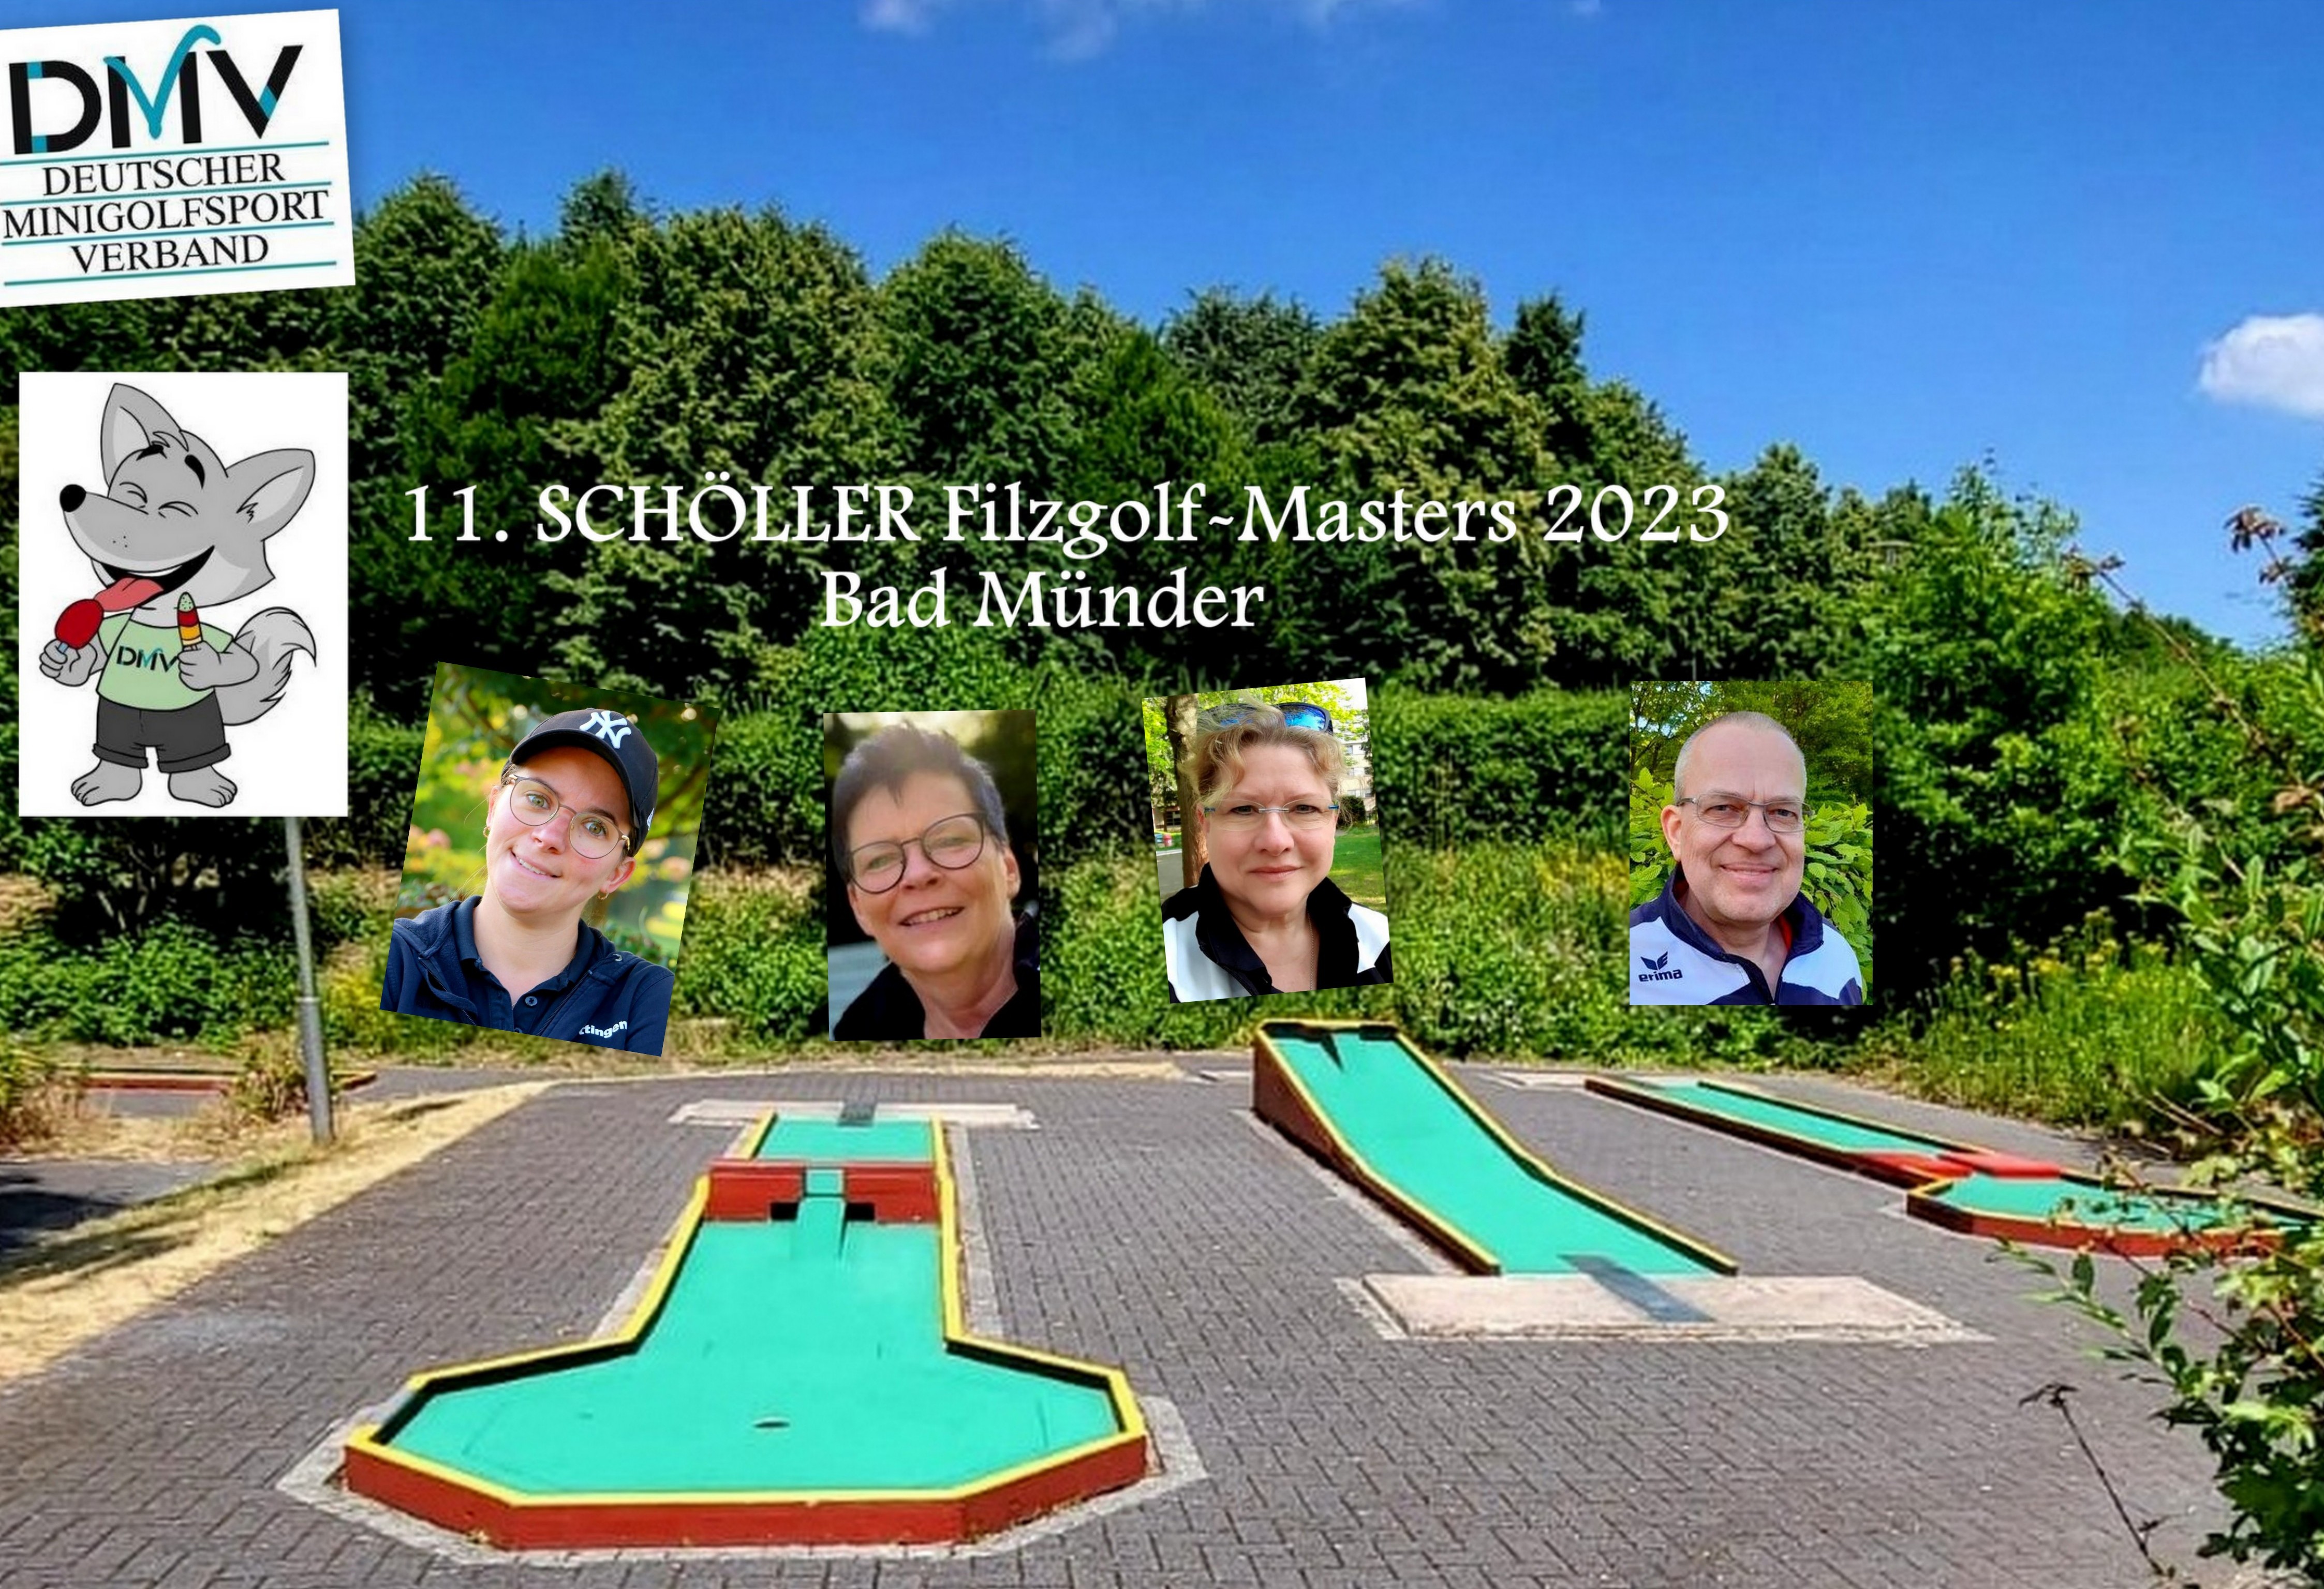 MGC Filzgolf Masters Bad Mnder 2023